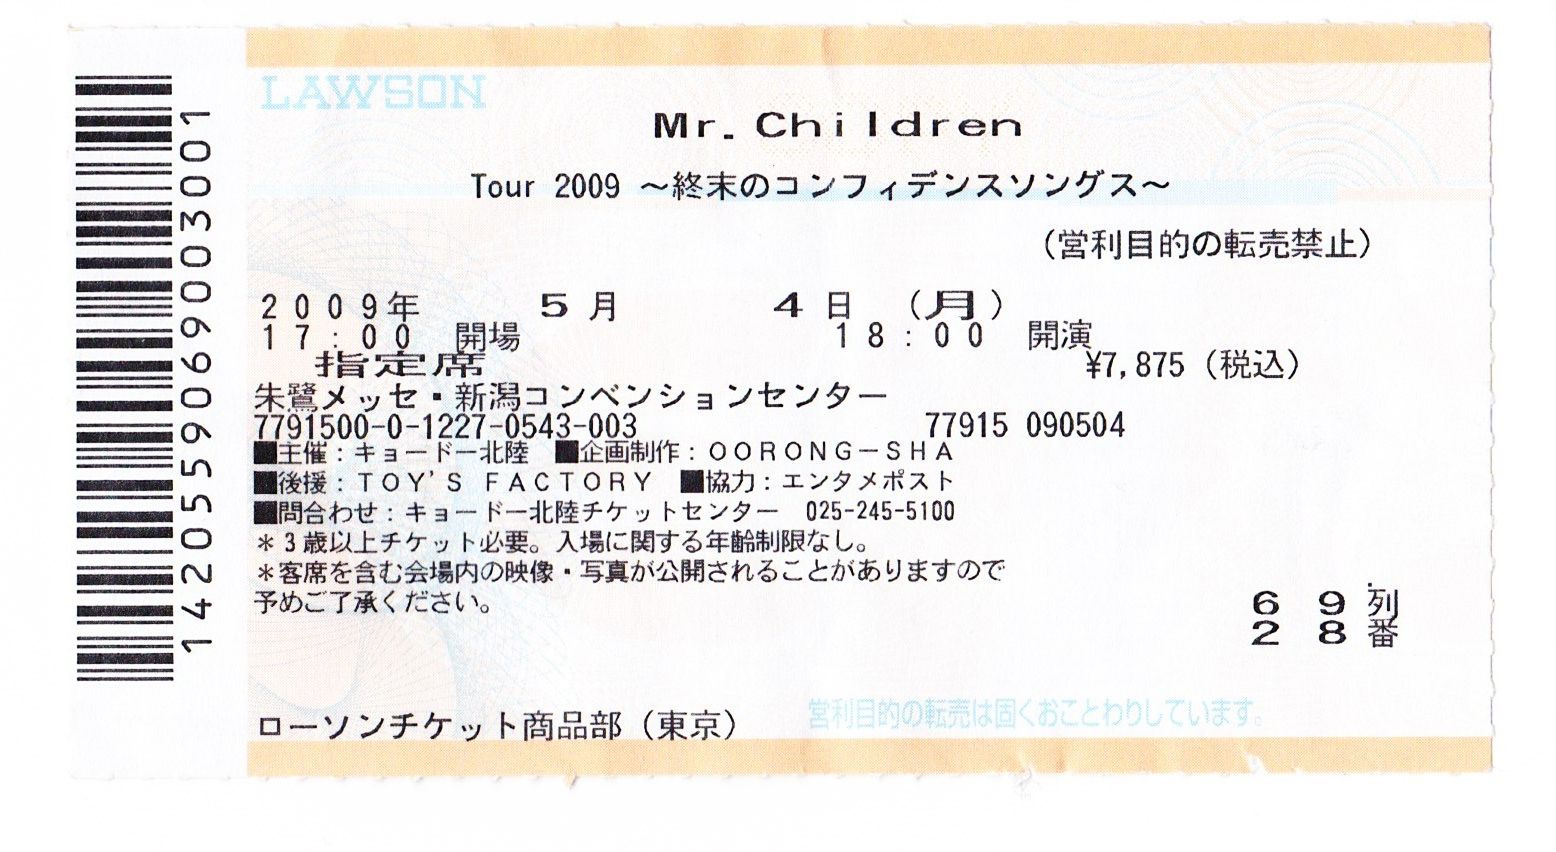 Mr Children Tour 09 終末のコンフィデンスソングス 朱鷺メッセ 新潟コンベンションセンター ミスチルと新潟